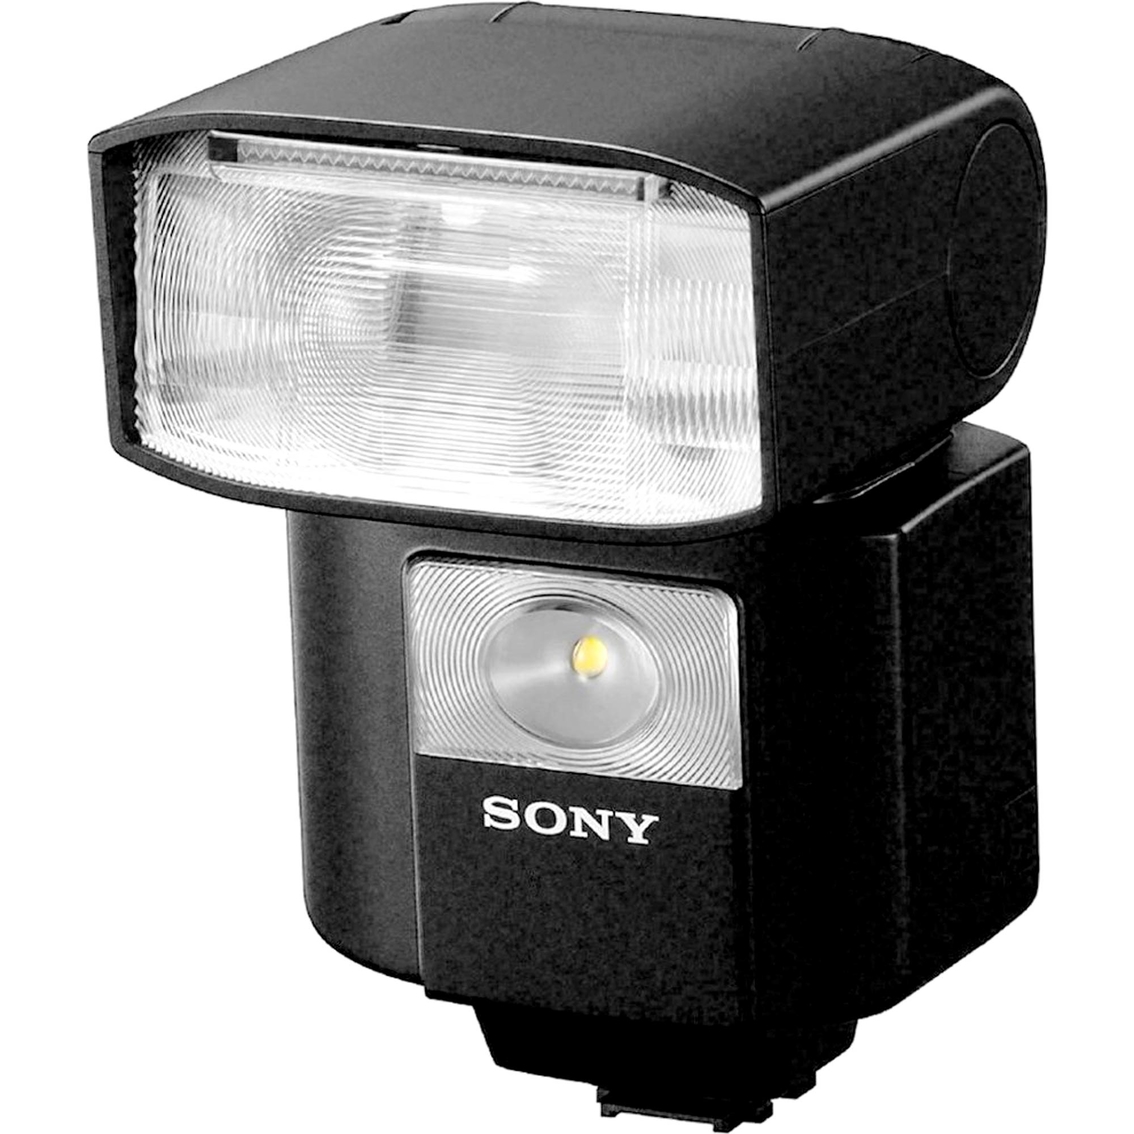 Sony External Camera Flash HVL-F45RM